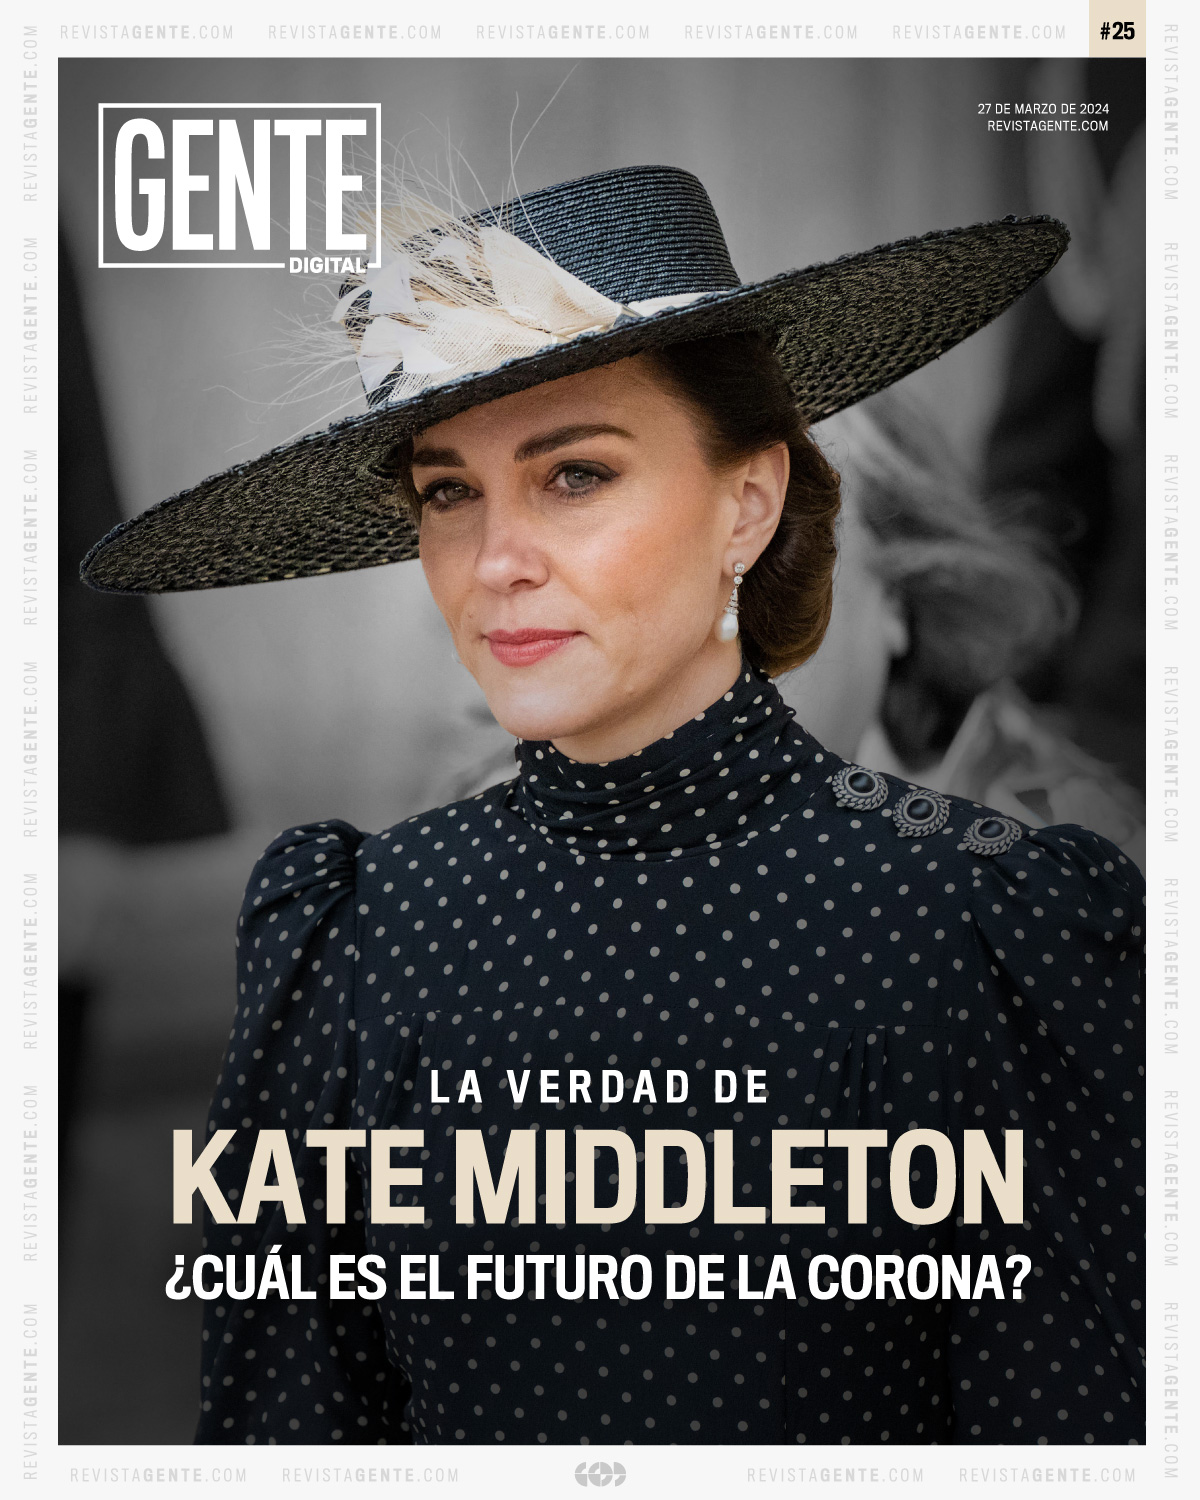 La verdad de Kate Middleton: ¿cuál es el futuro de la corona?